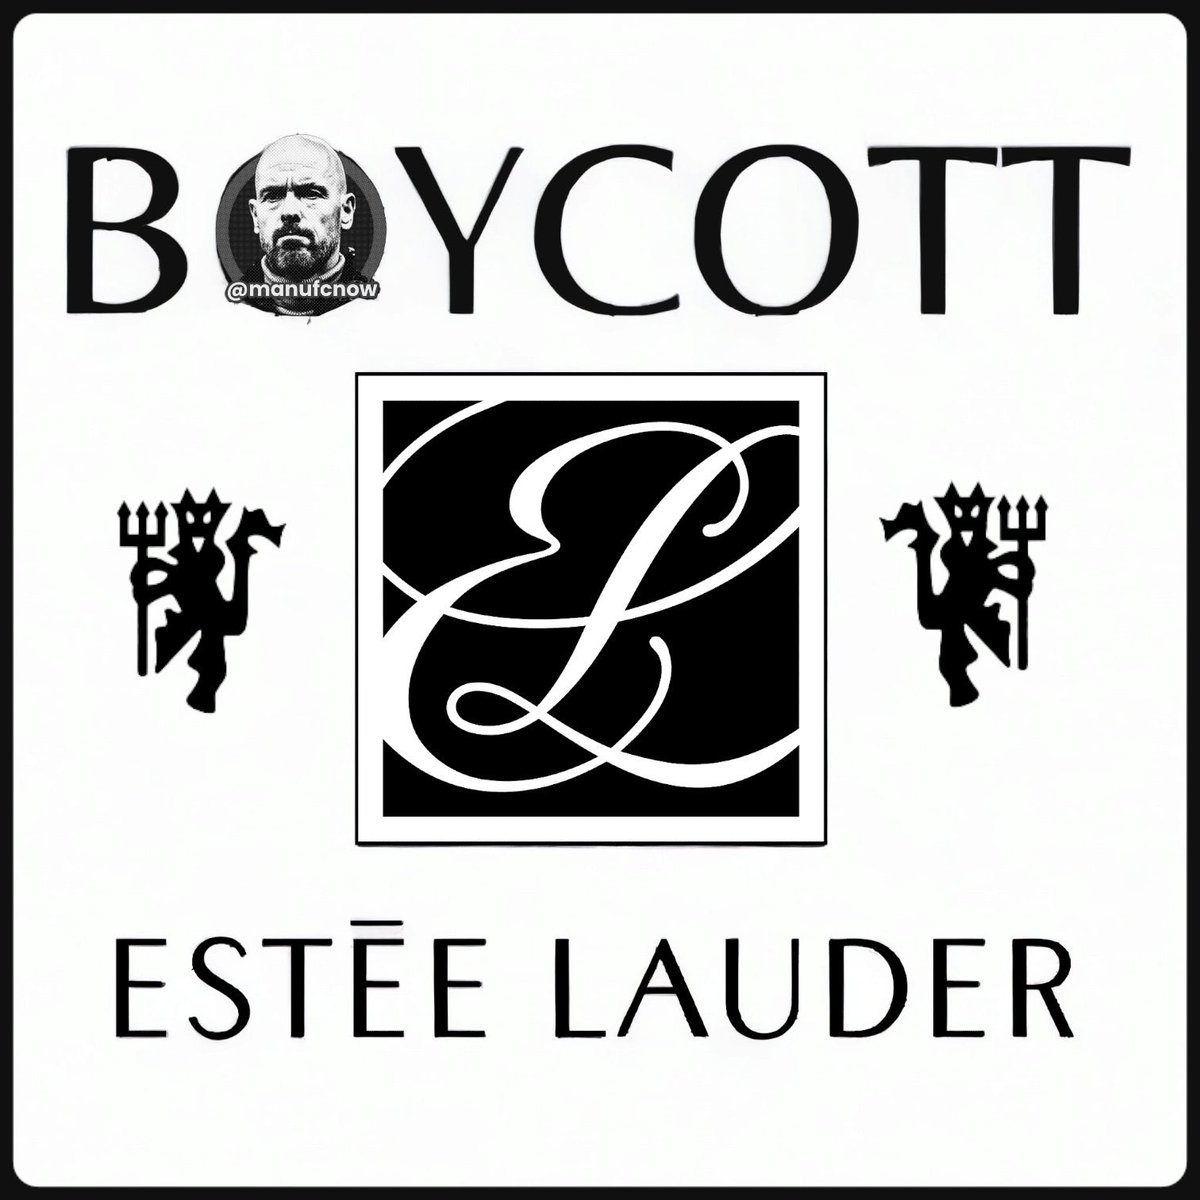 @EsteeLauderUK 'I am boycotting Estee Lauder until you cease association w/ The Glazers #GlazersOut #BoycottEsteeLauder'